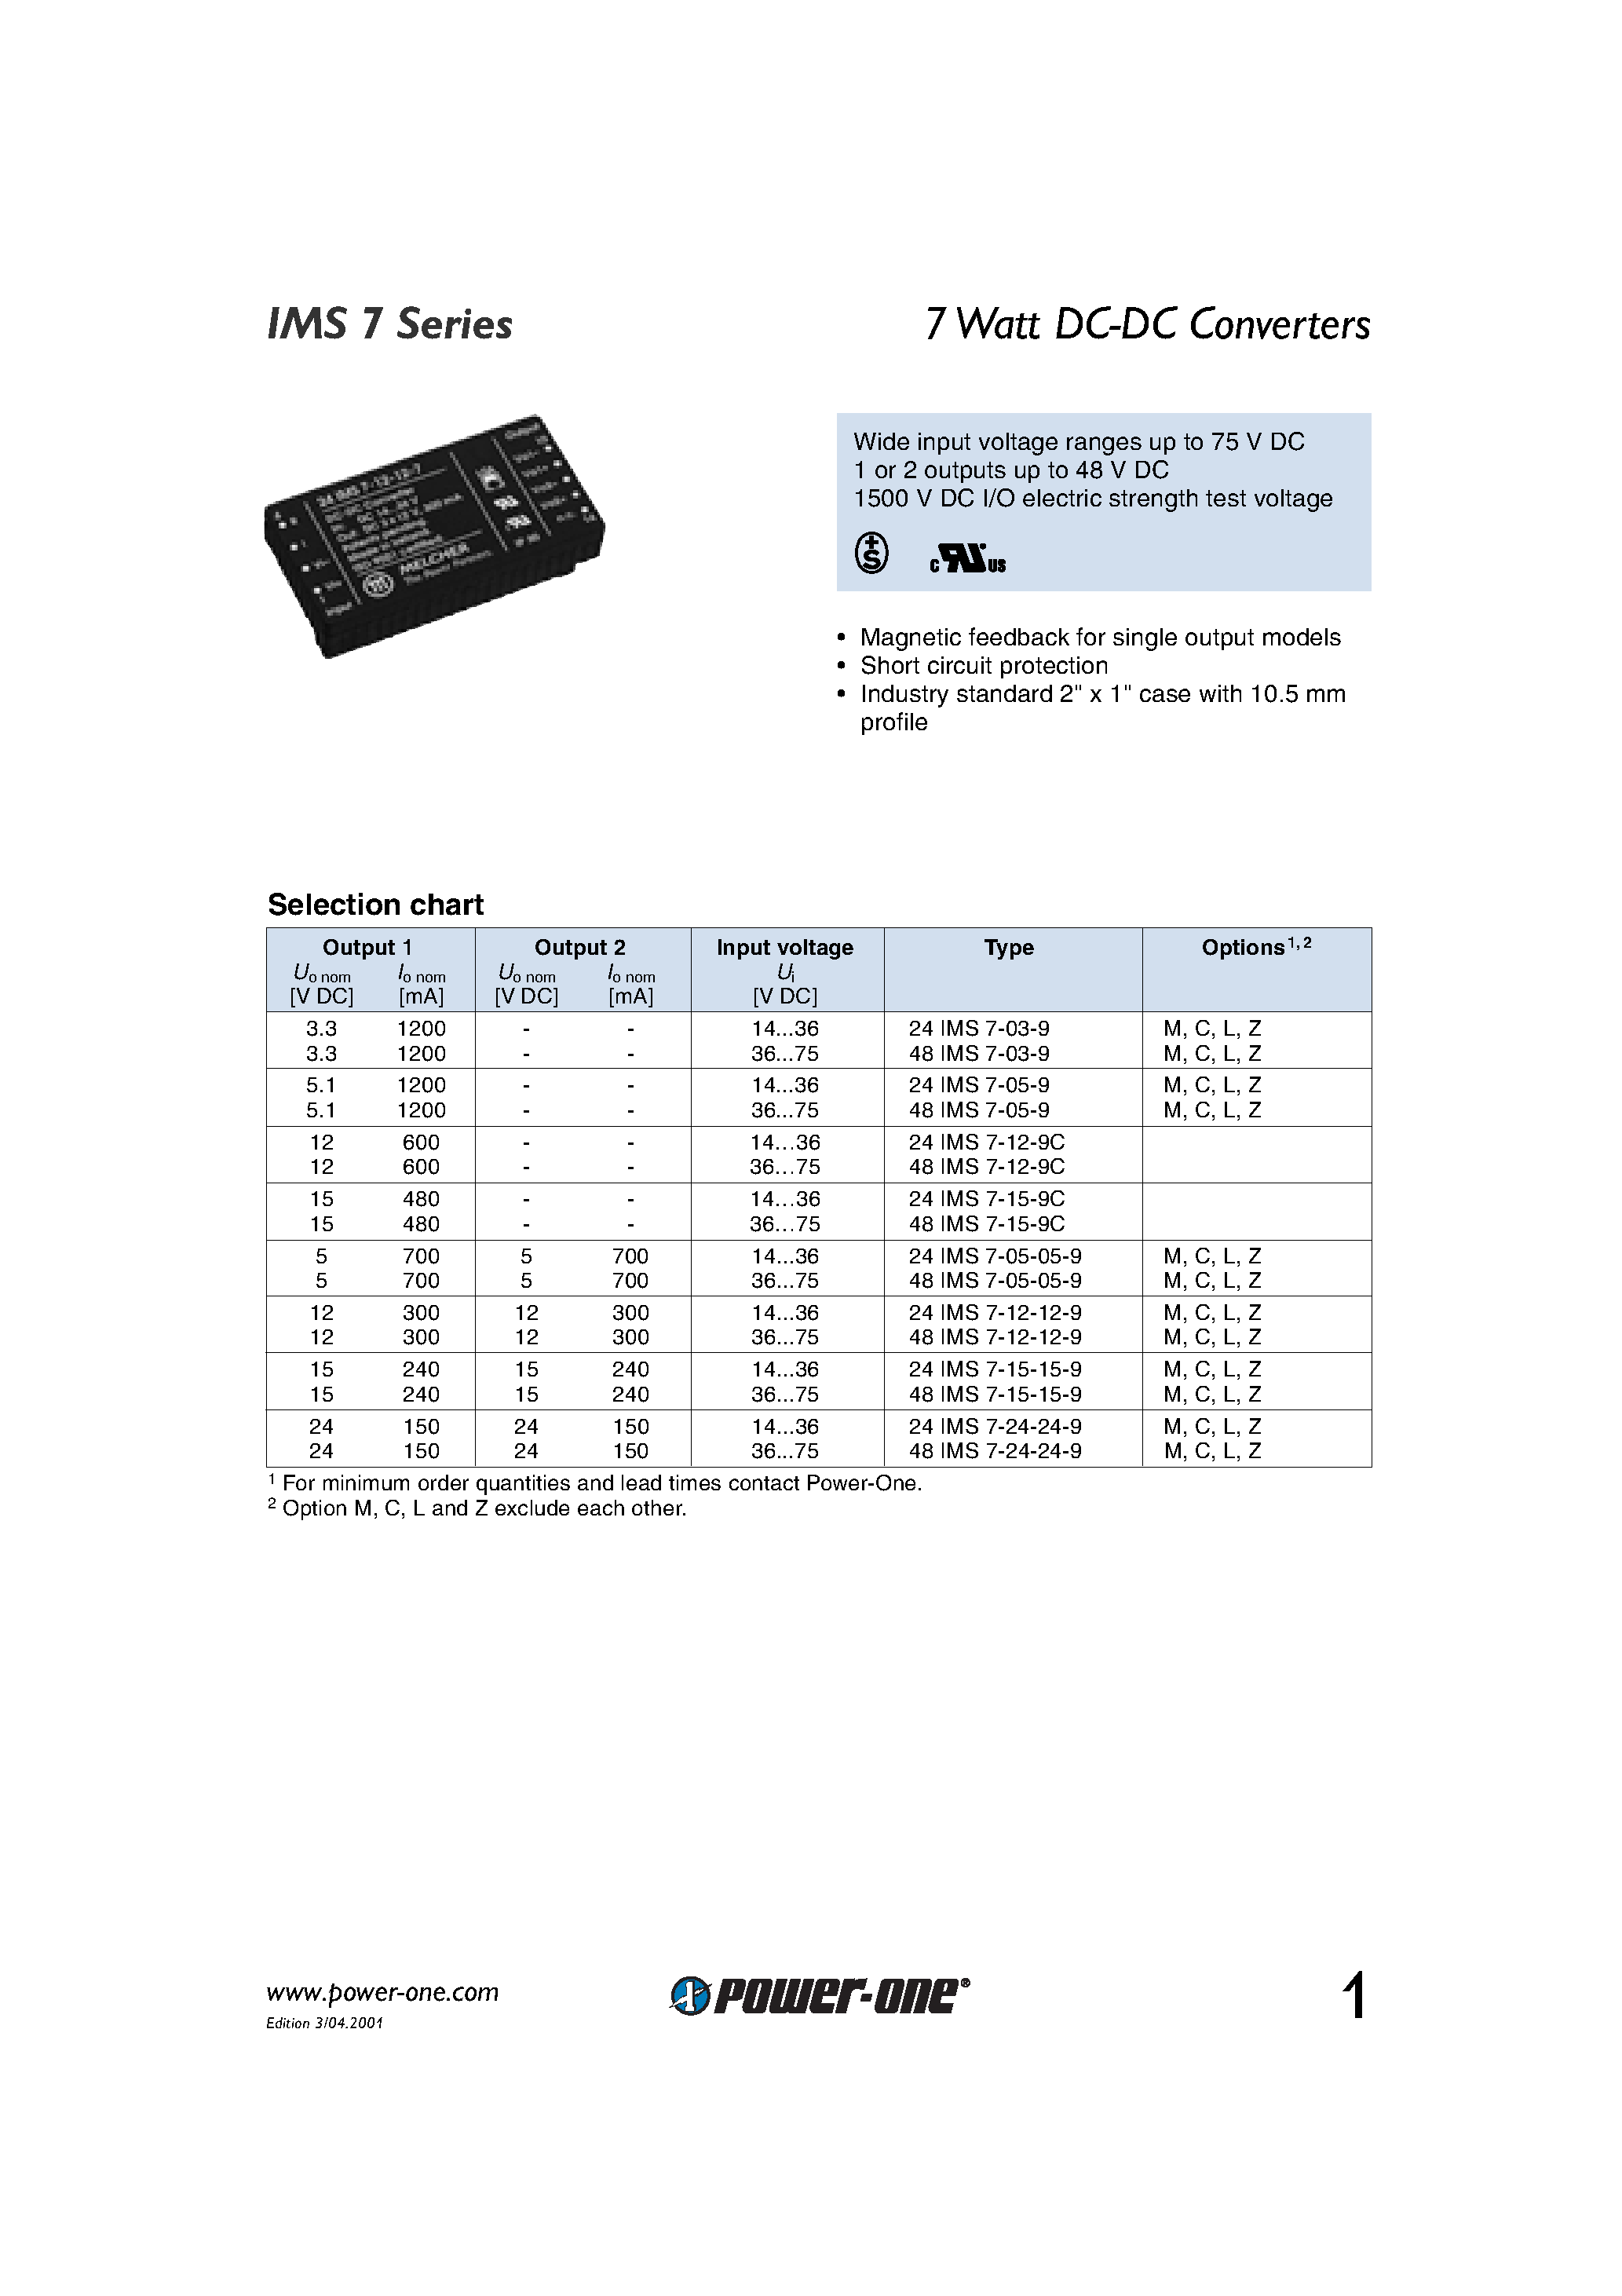 Datasheet 48IMS7-03-9 - 7 Watt DC-DC Converters page 1